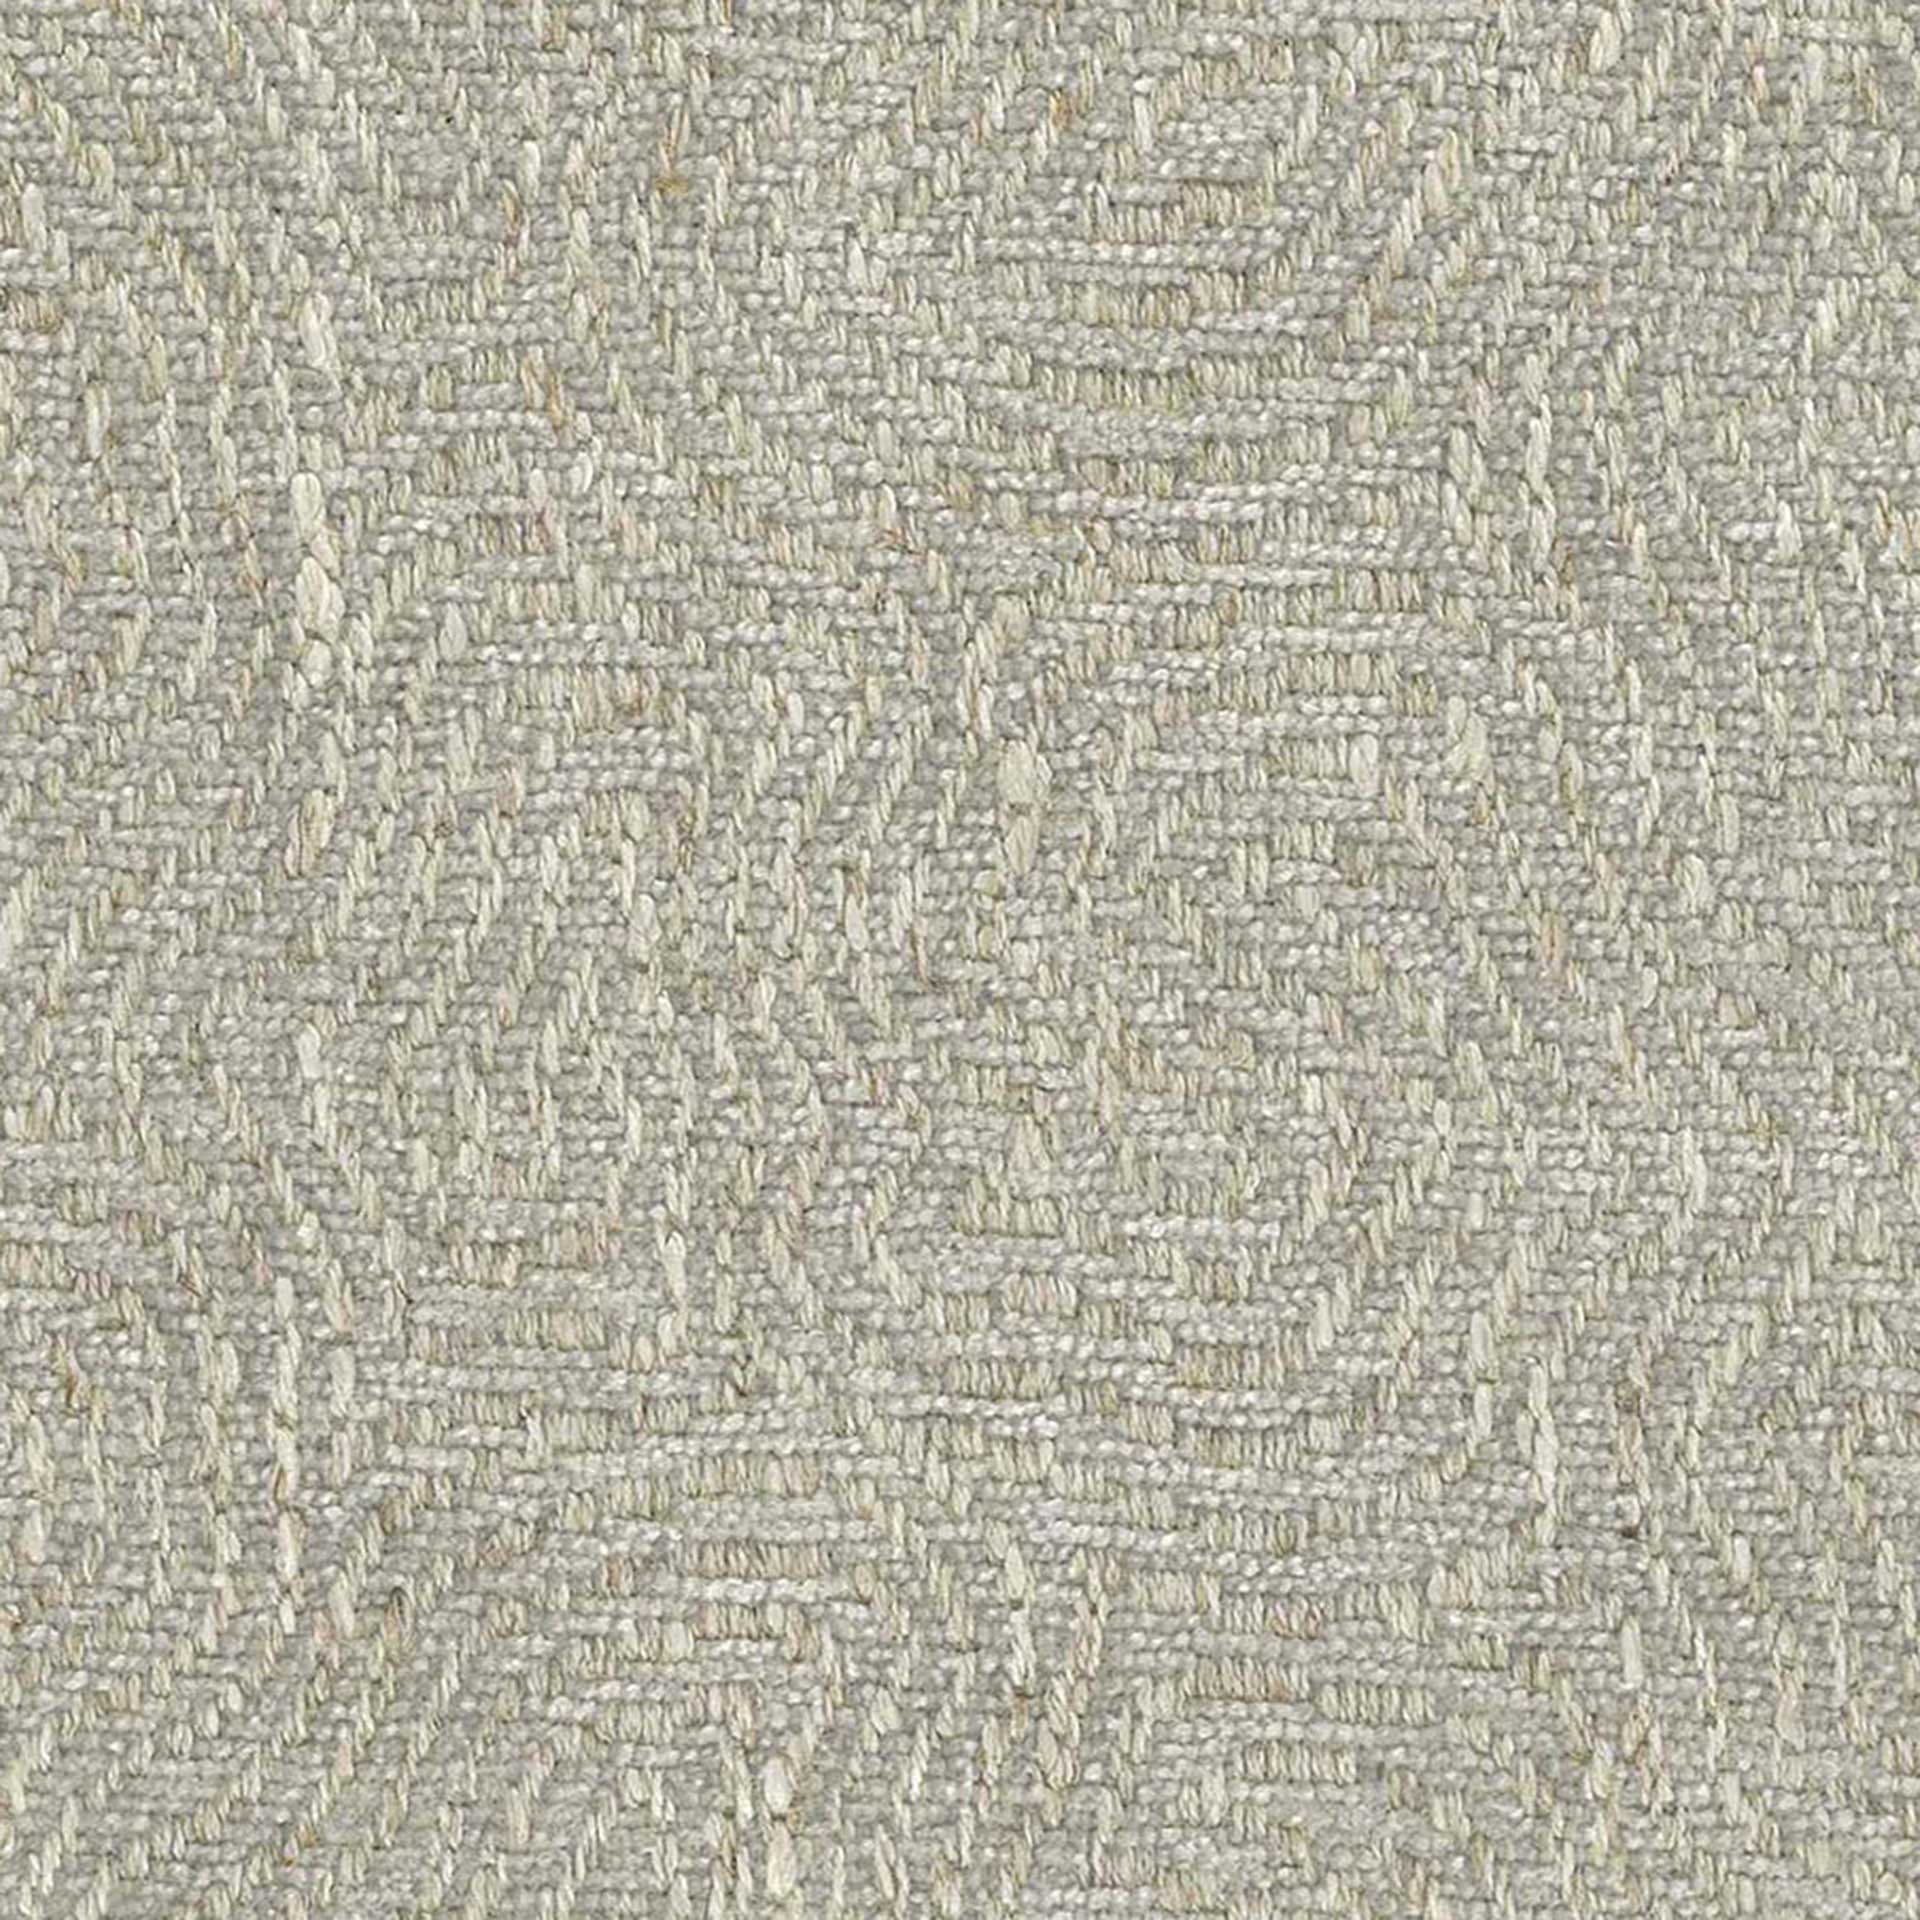 Nina Campbell Fabric - Claribel Verve Grey NCF4285-02